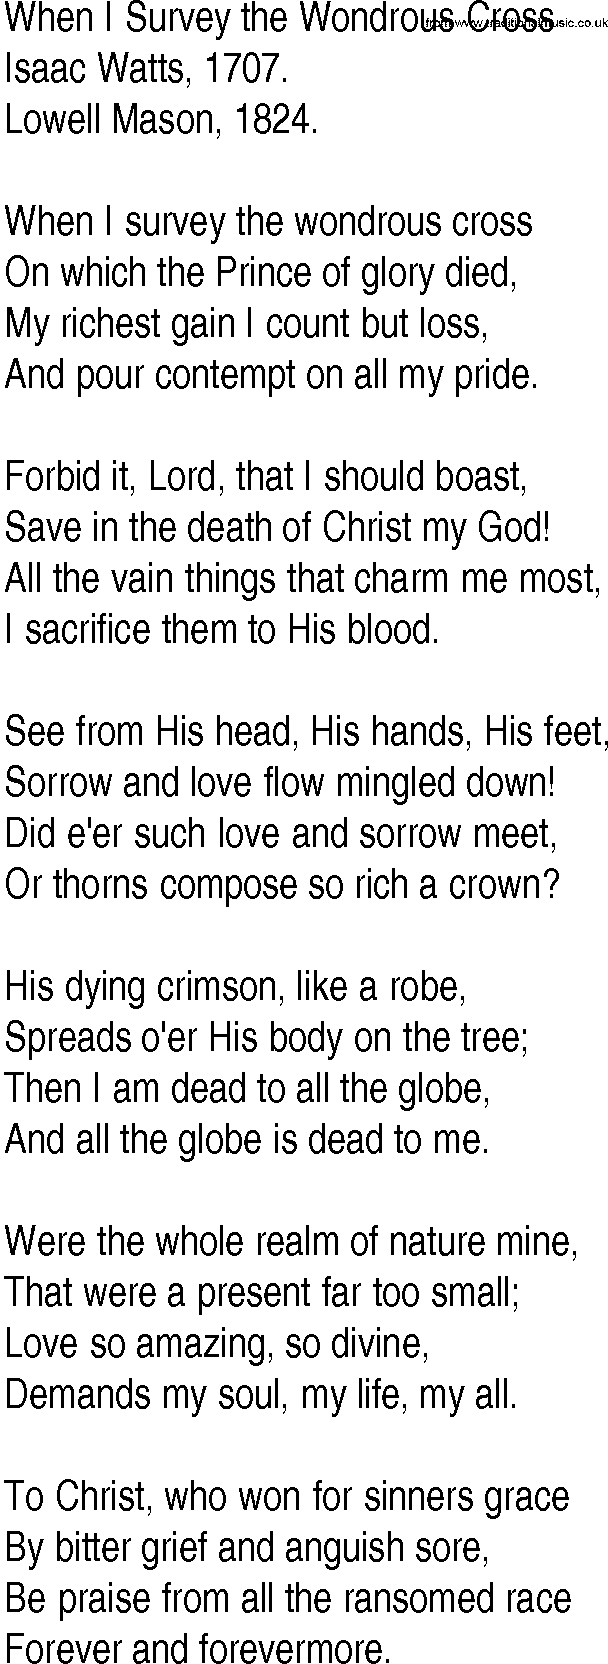 Hymn and Gospel Song: When I Survey the Wondrous Cross by Isaac Watts lyrics